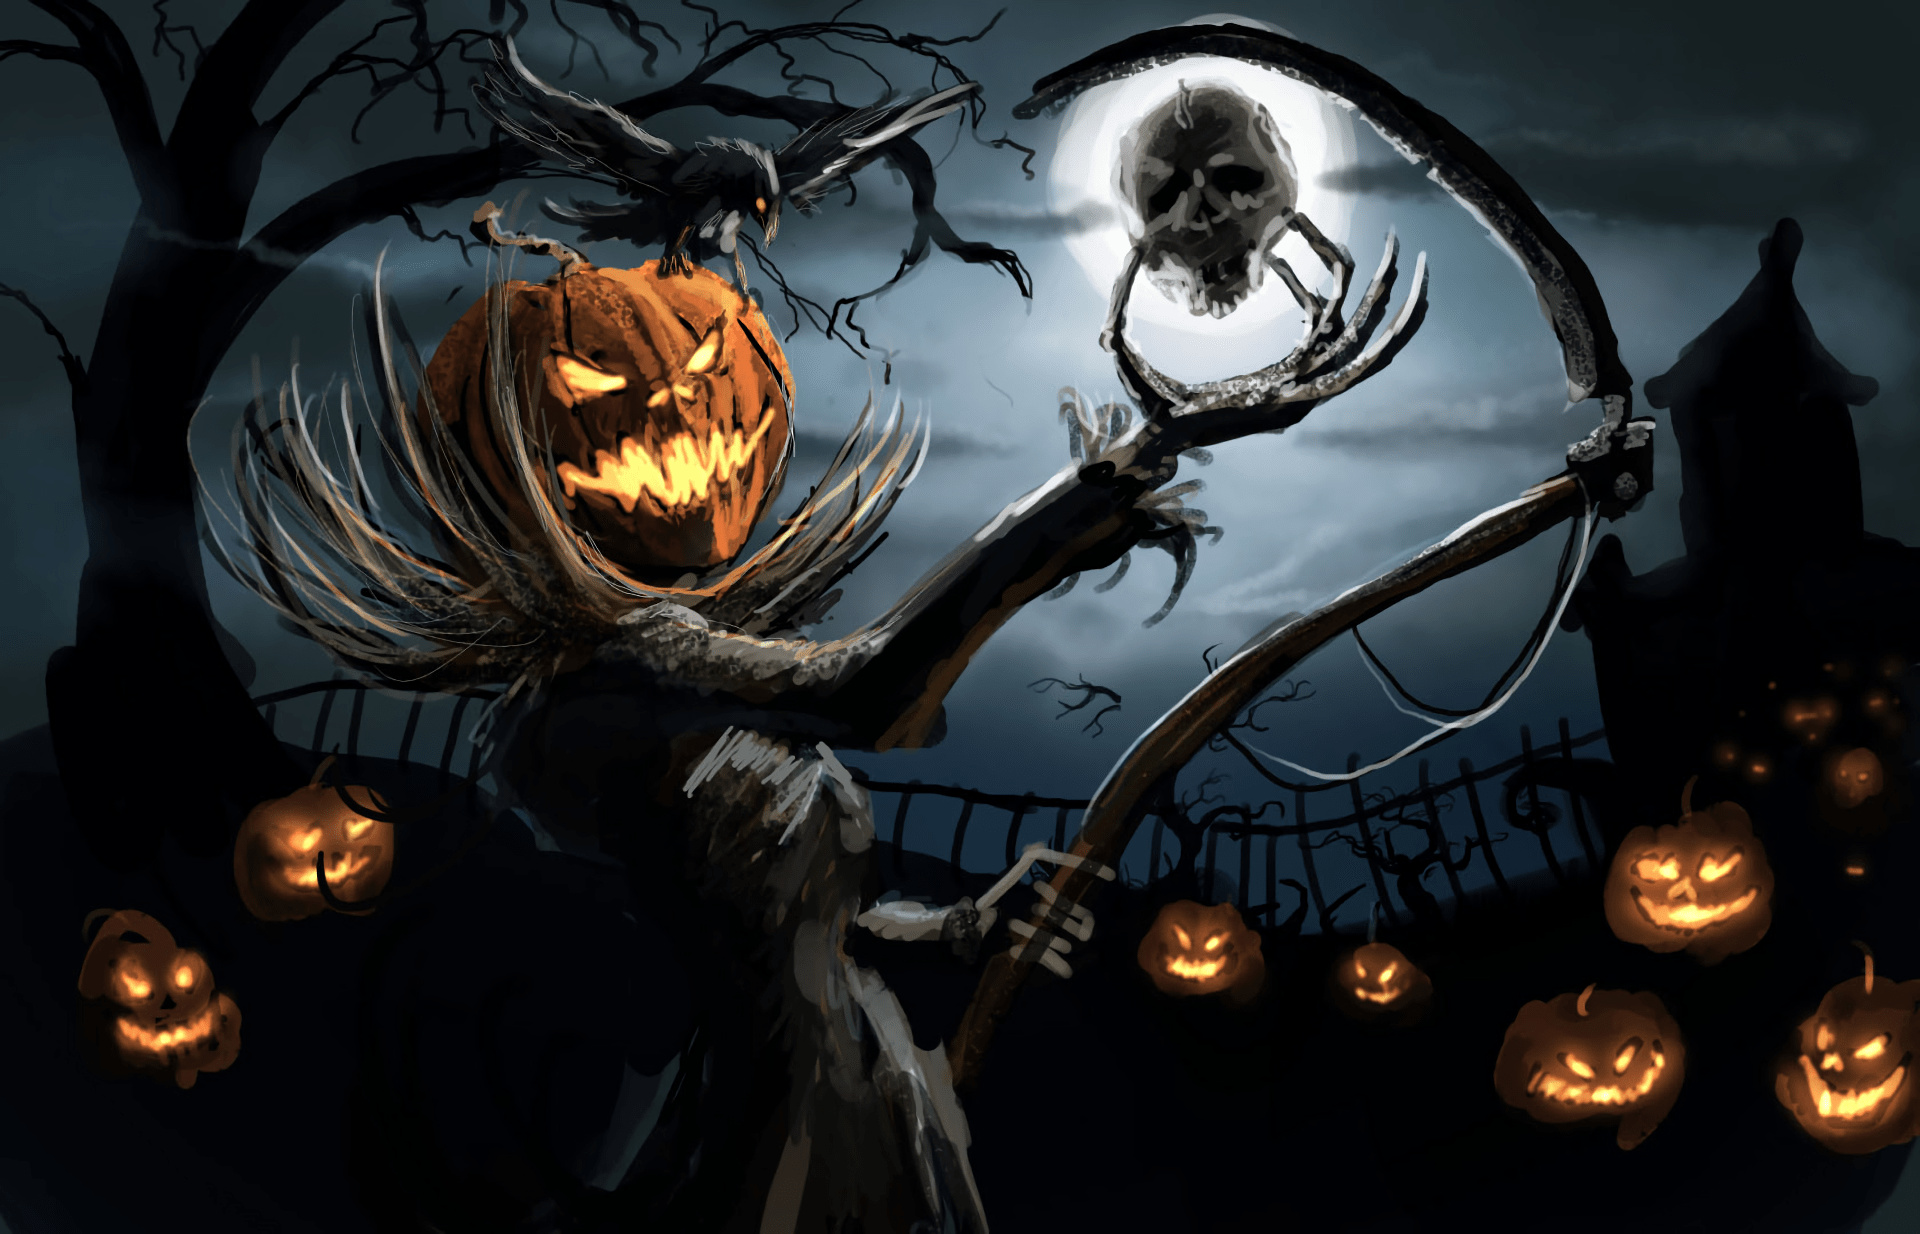 Top 25 Jack OLantern Wallpapers 2020  Halloween Pumpkin 